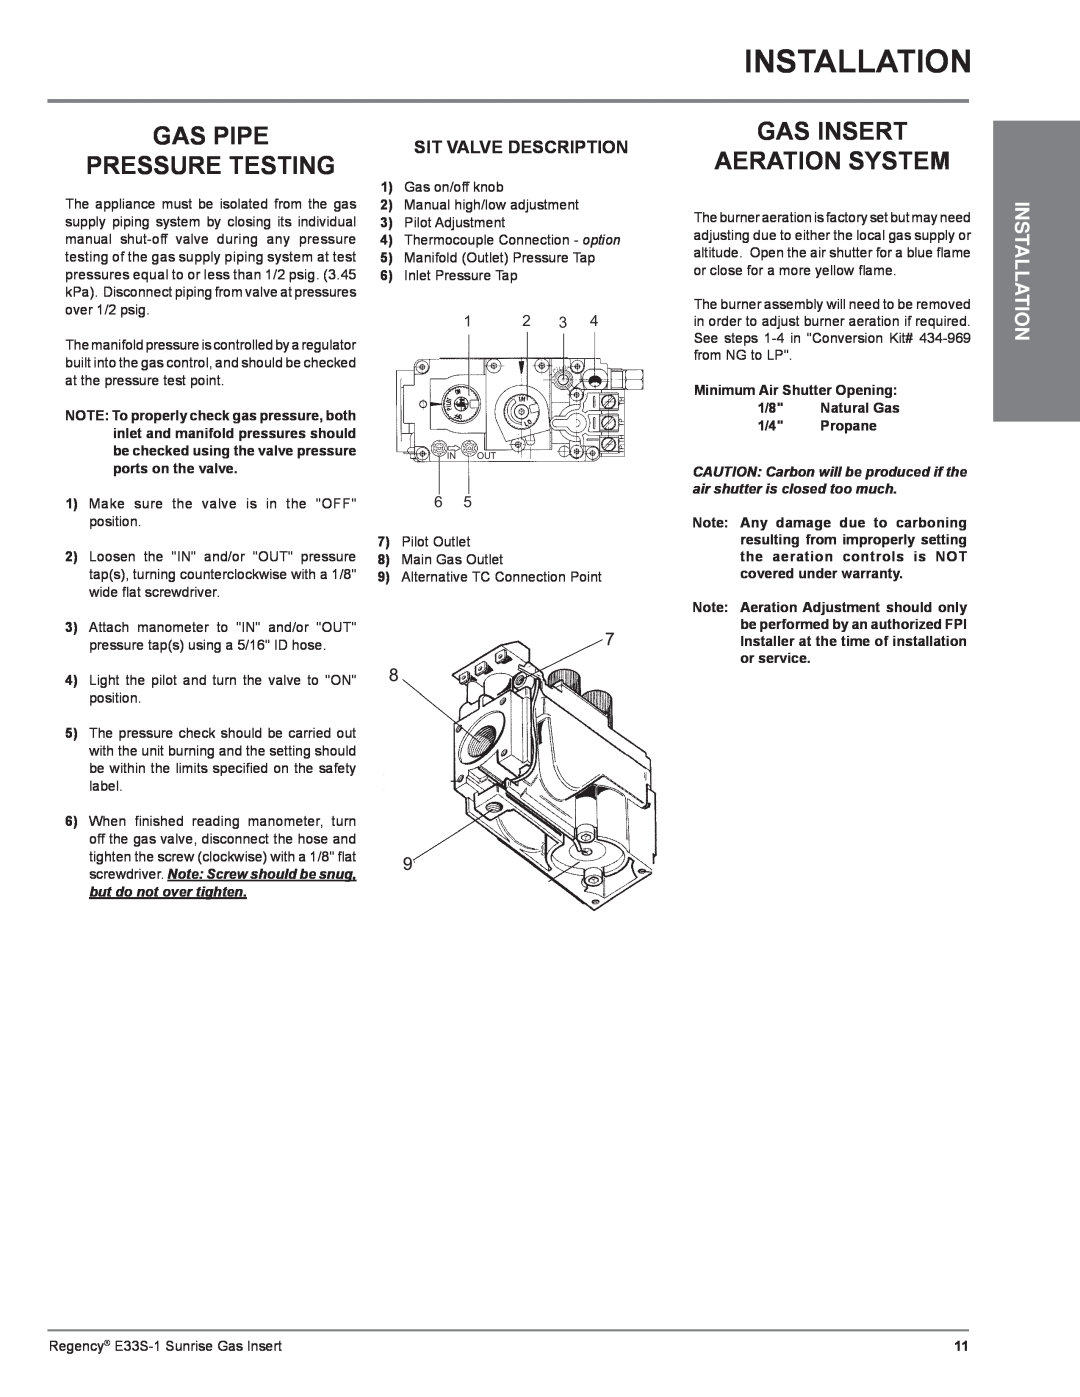 Regency E33S Installation, Gas Pipe Pressure Testing, Gas Insert Aeration System, Sit Valve Description, 1/4 Propane 